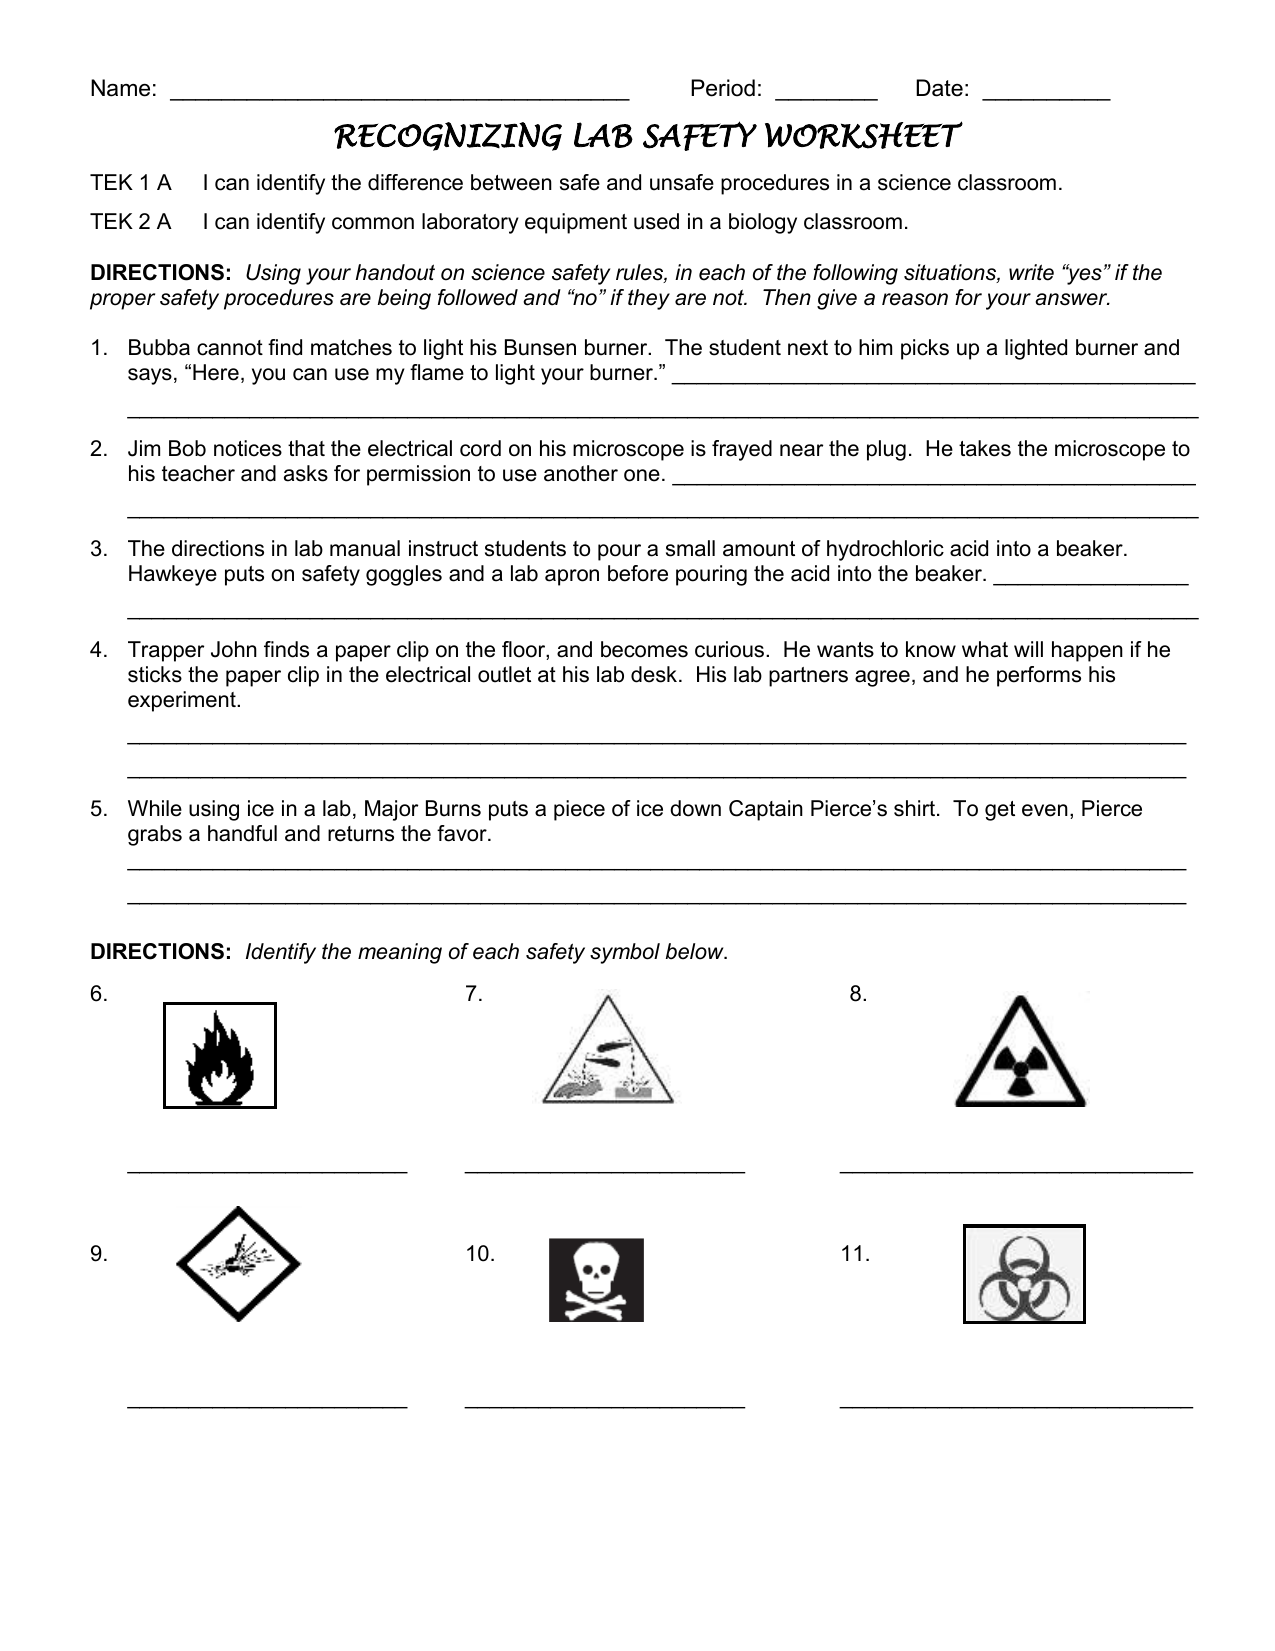 Lab Safety Worksheet 11 With Regard To Lab Safety Worksheet Answer Key